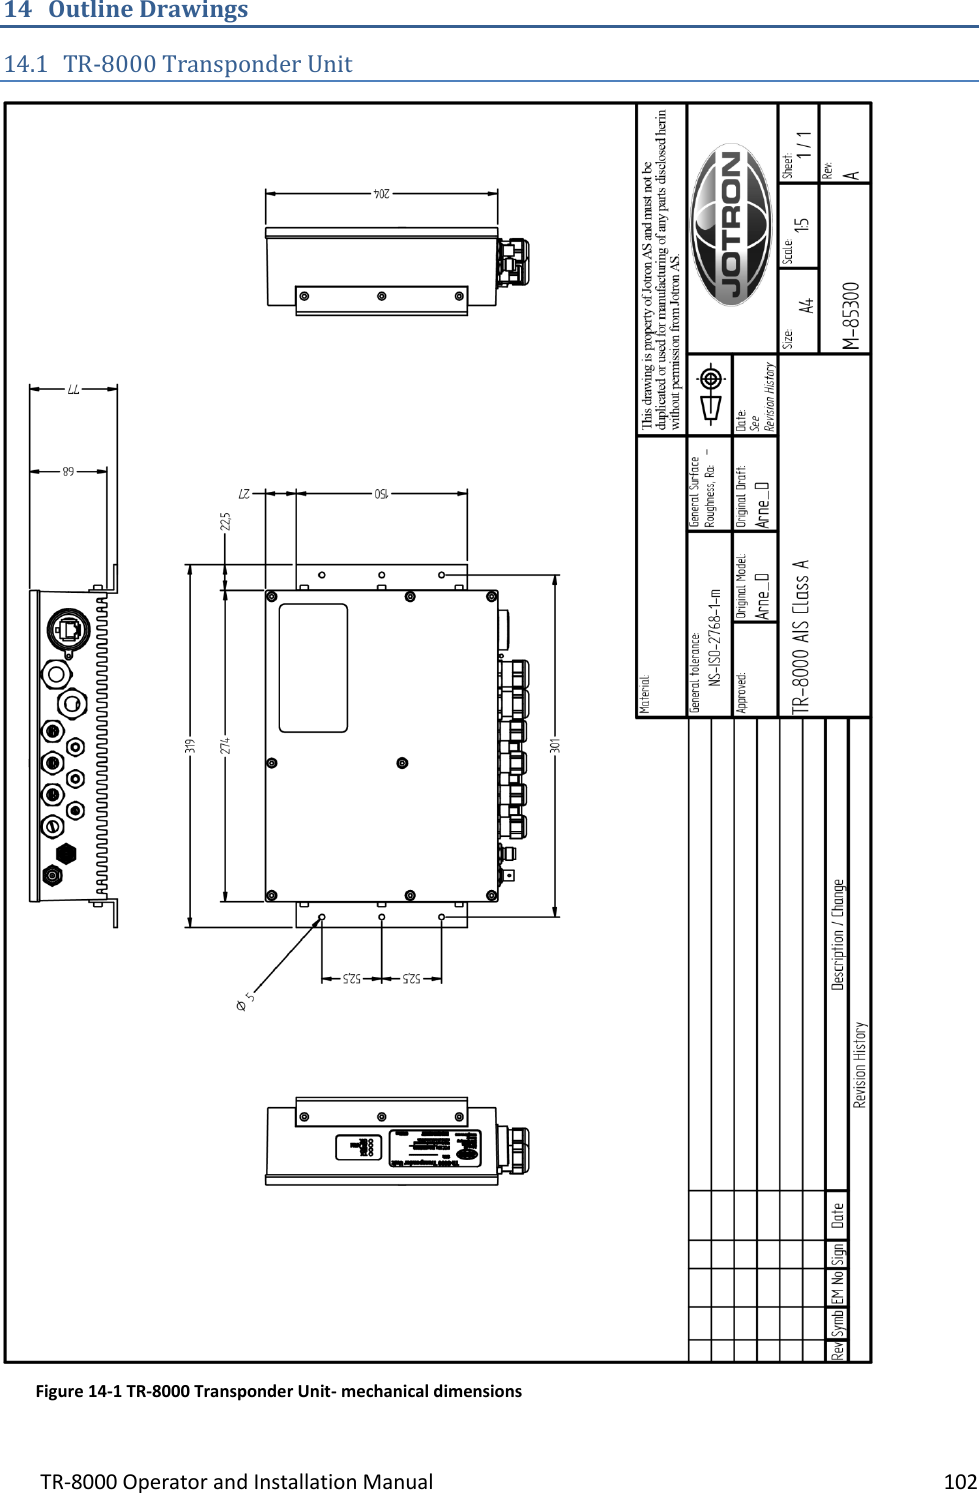 TR-8000 Operator and Installation Manual    102  14 Outline Drawings 14.1 TR-8000 Transponder Unit     Figure 14-1 TR-8000 Transponder Unit- mechanical dimensions 